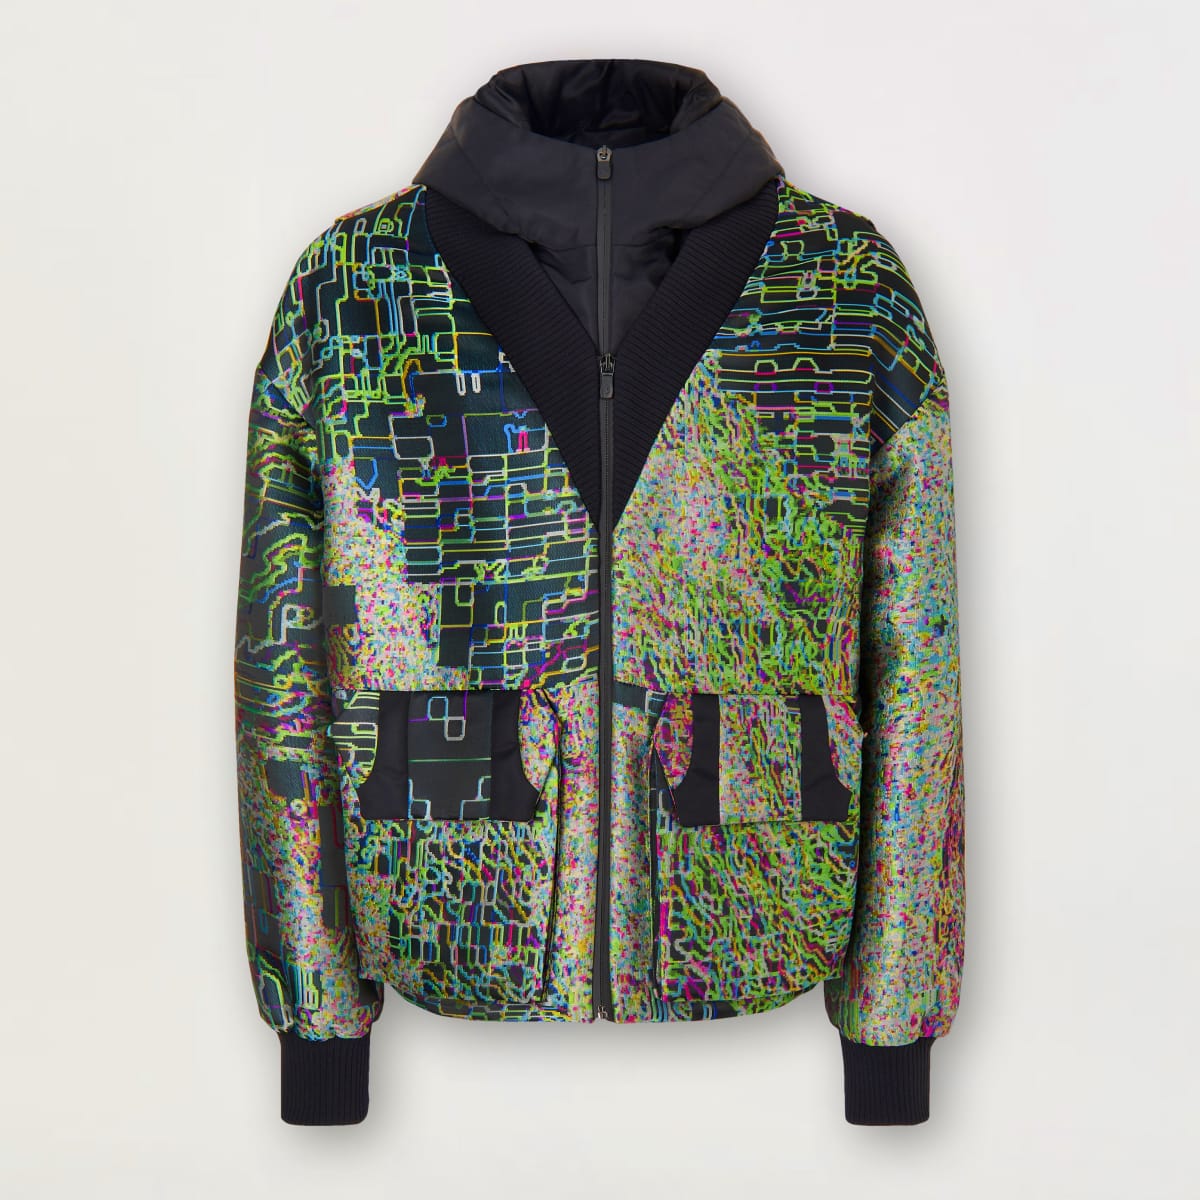 Jacquard bomber jacket / cardigan with multicoloured print